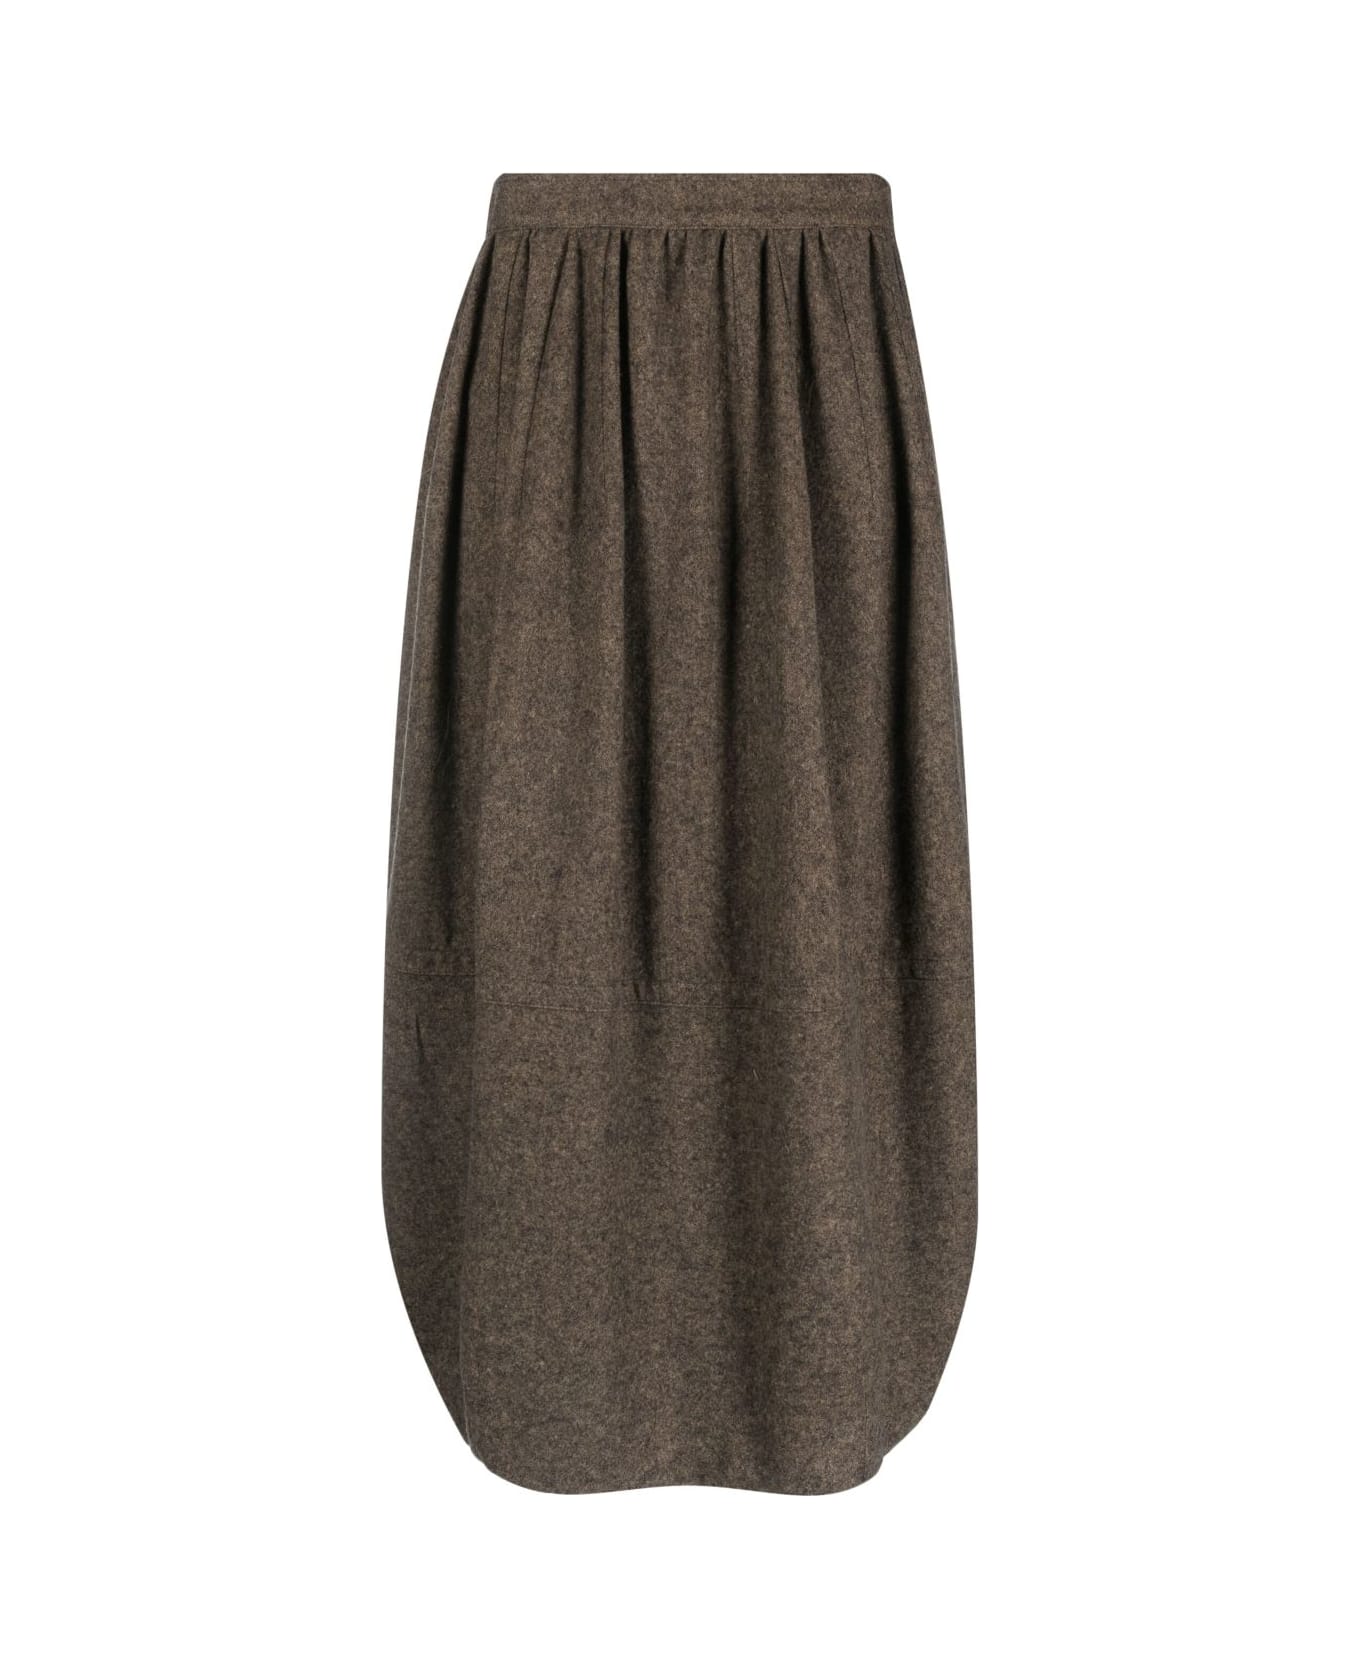 Gentry Portofino Woven Skirt - Brown